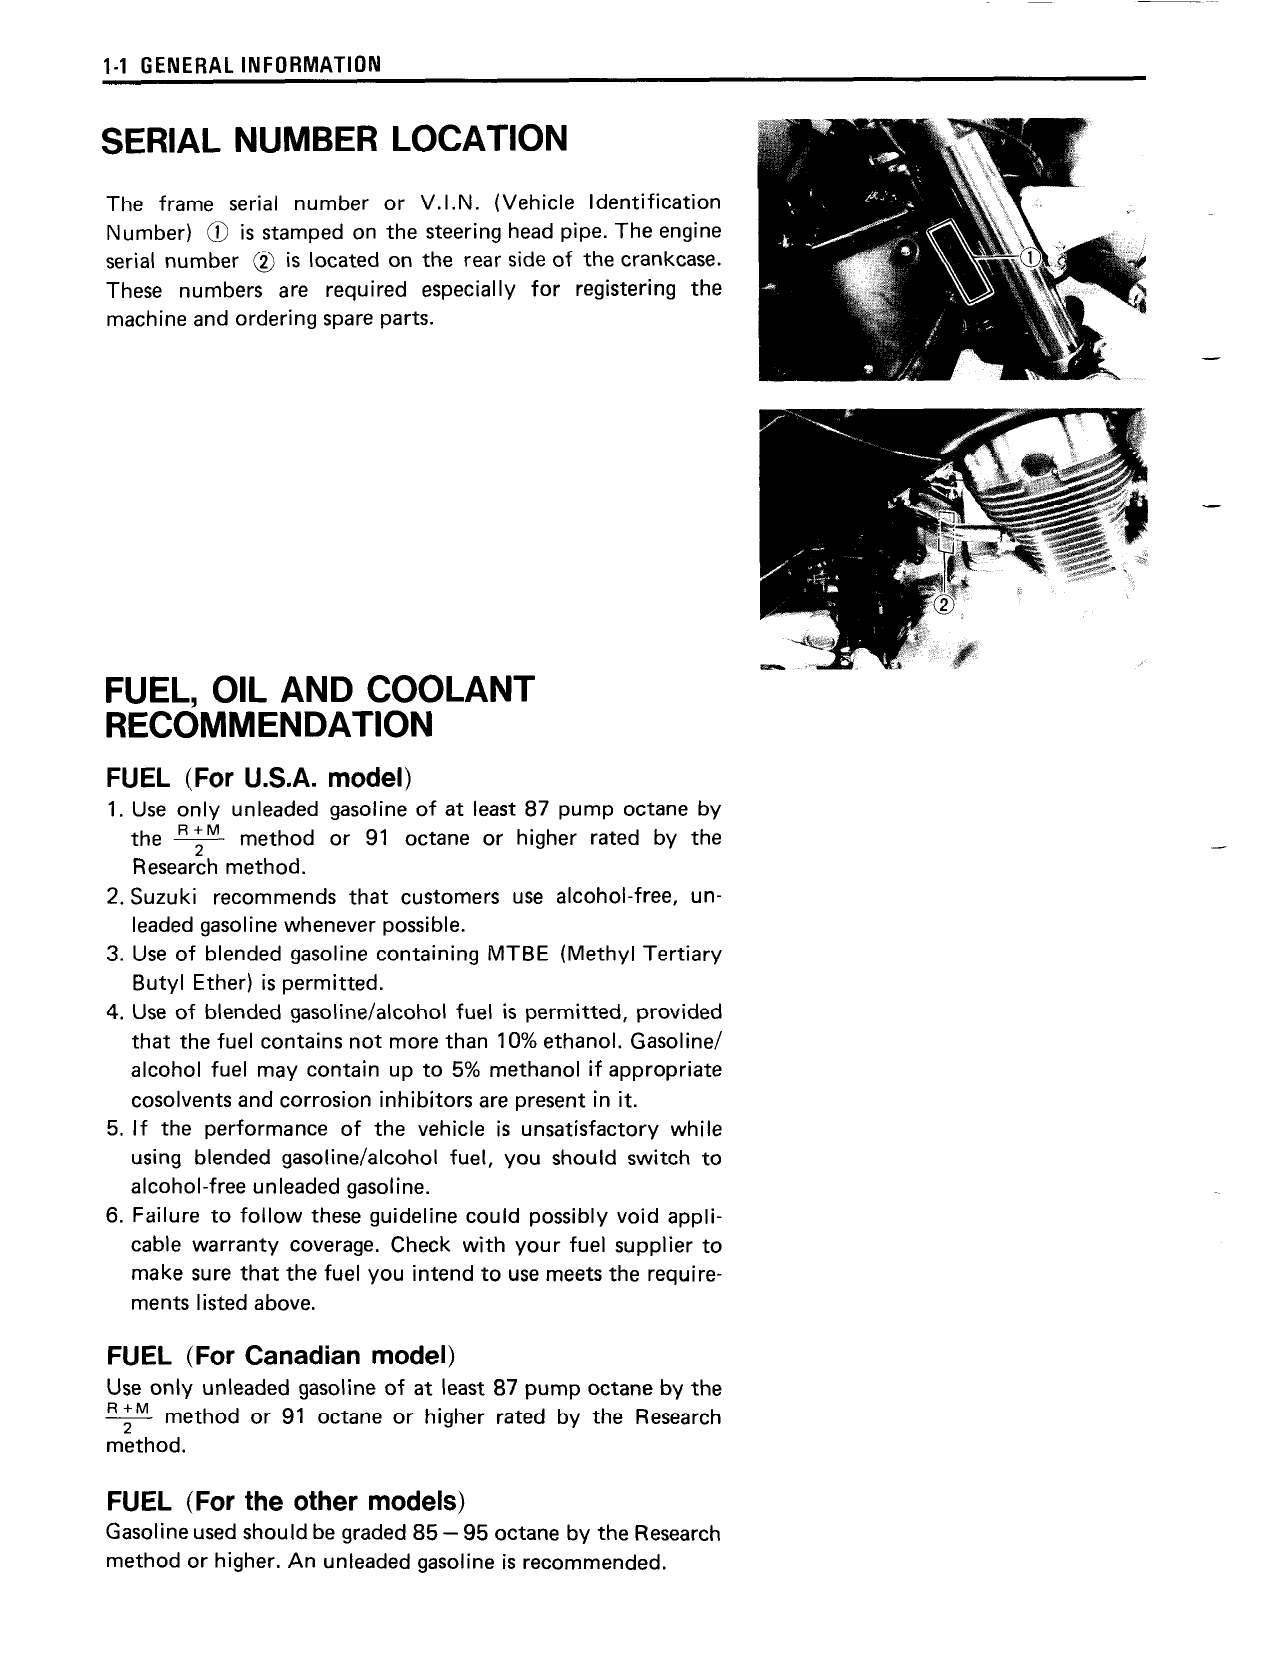 1990-1993 Suzuki VX 800, VX-800L repair and service manual Preview image 4